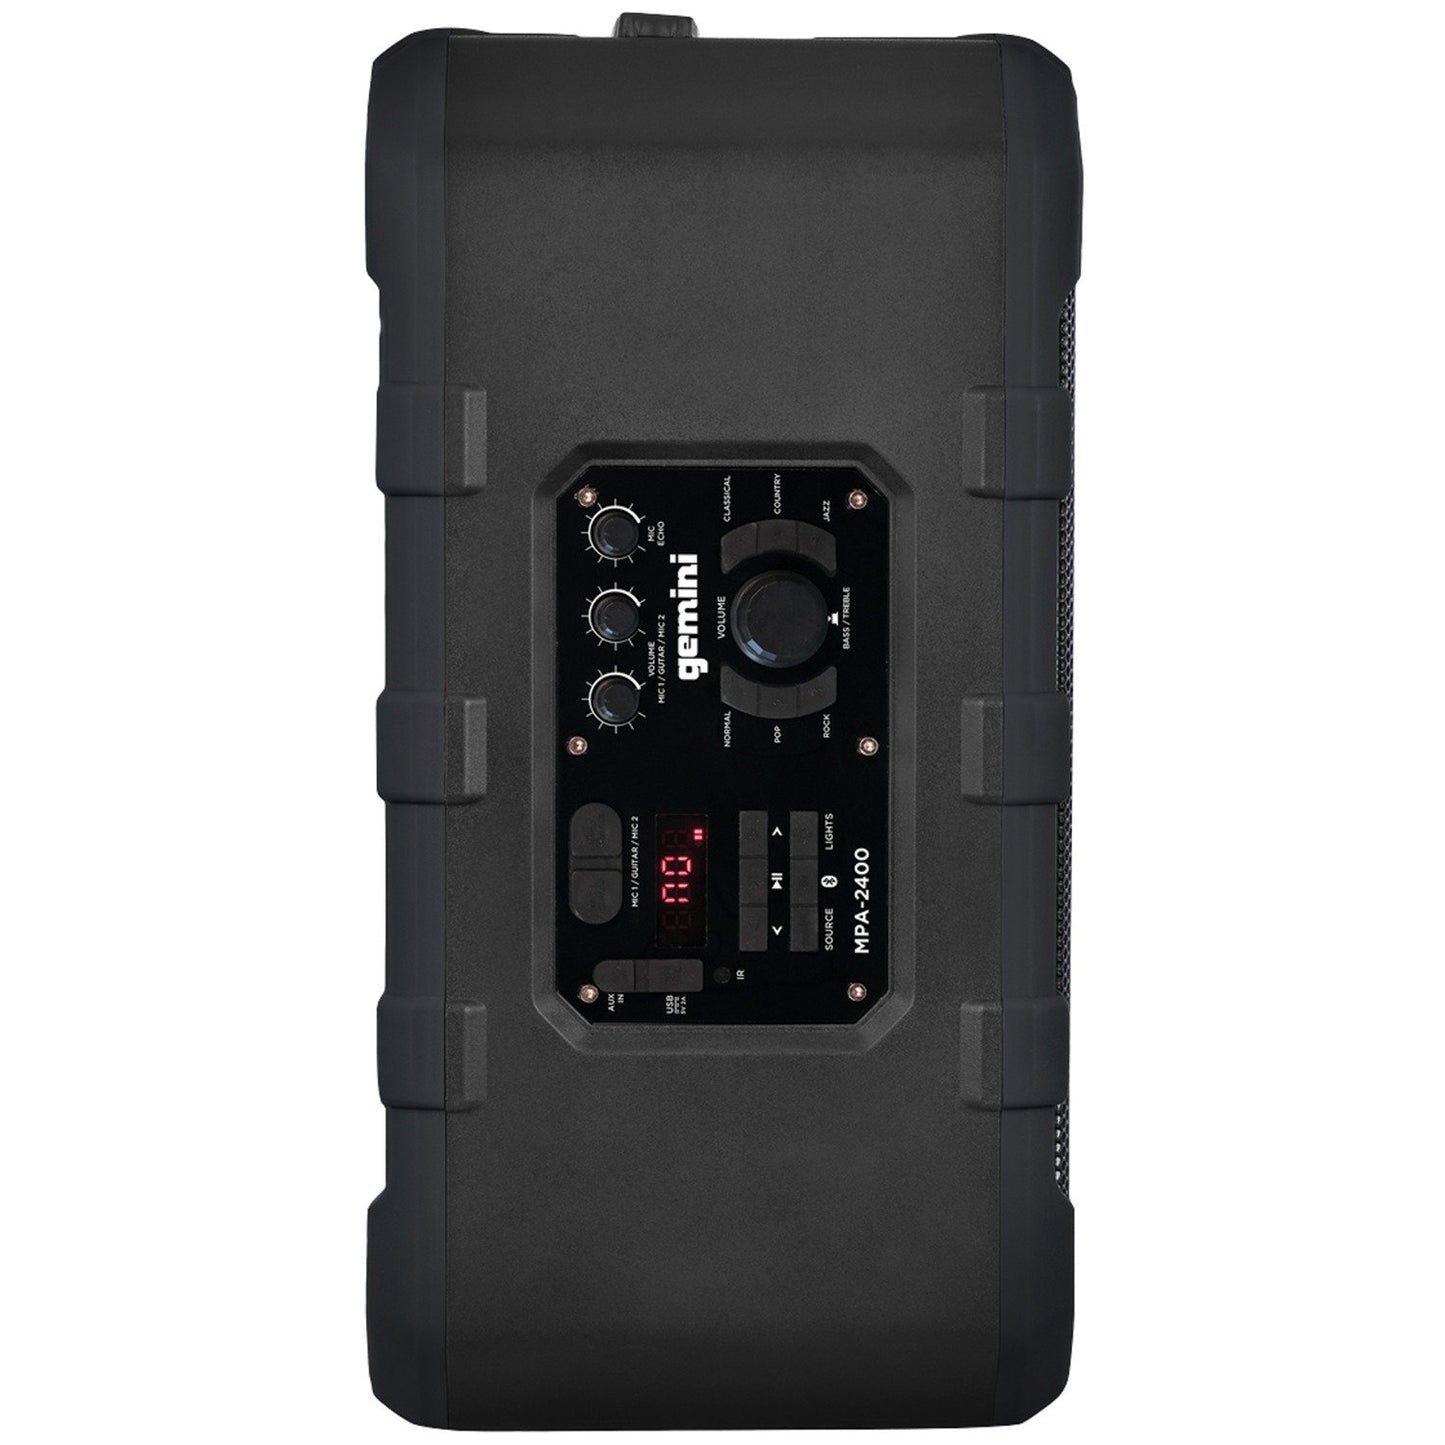 Gemini MPA-2400GRY MPA-2400 Bluetooth® Portable Party System (Gray)